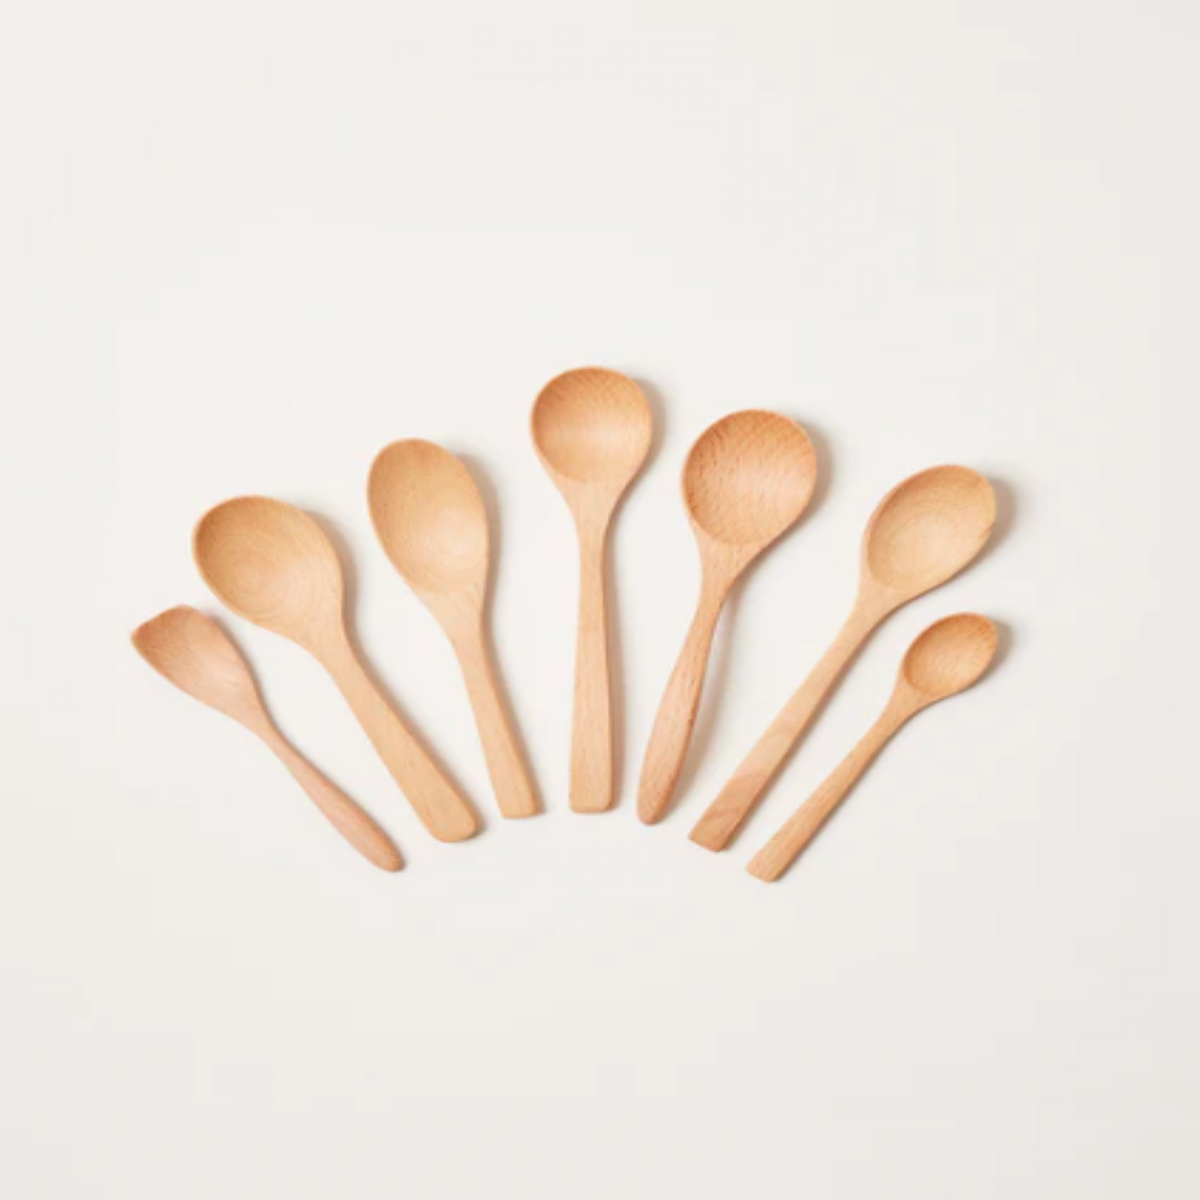 Essential Kitchen Little Spoon Set - Set of 7